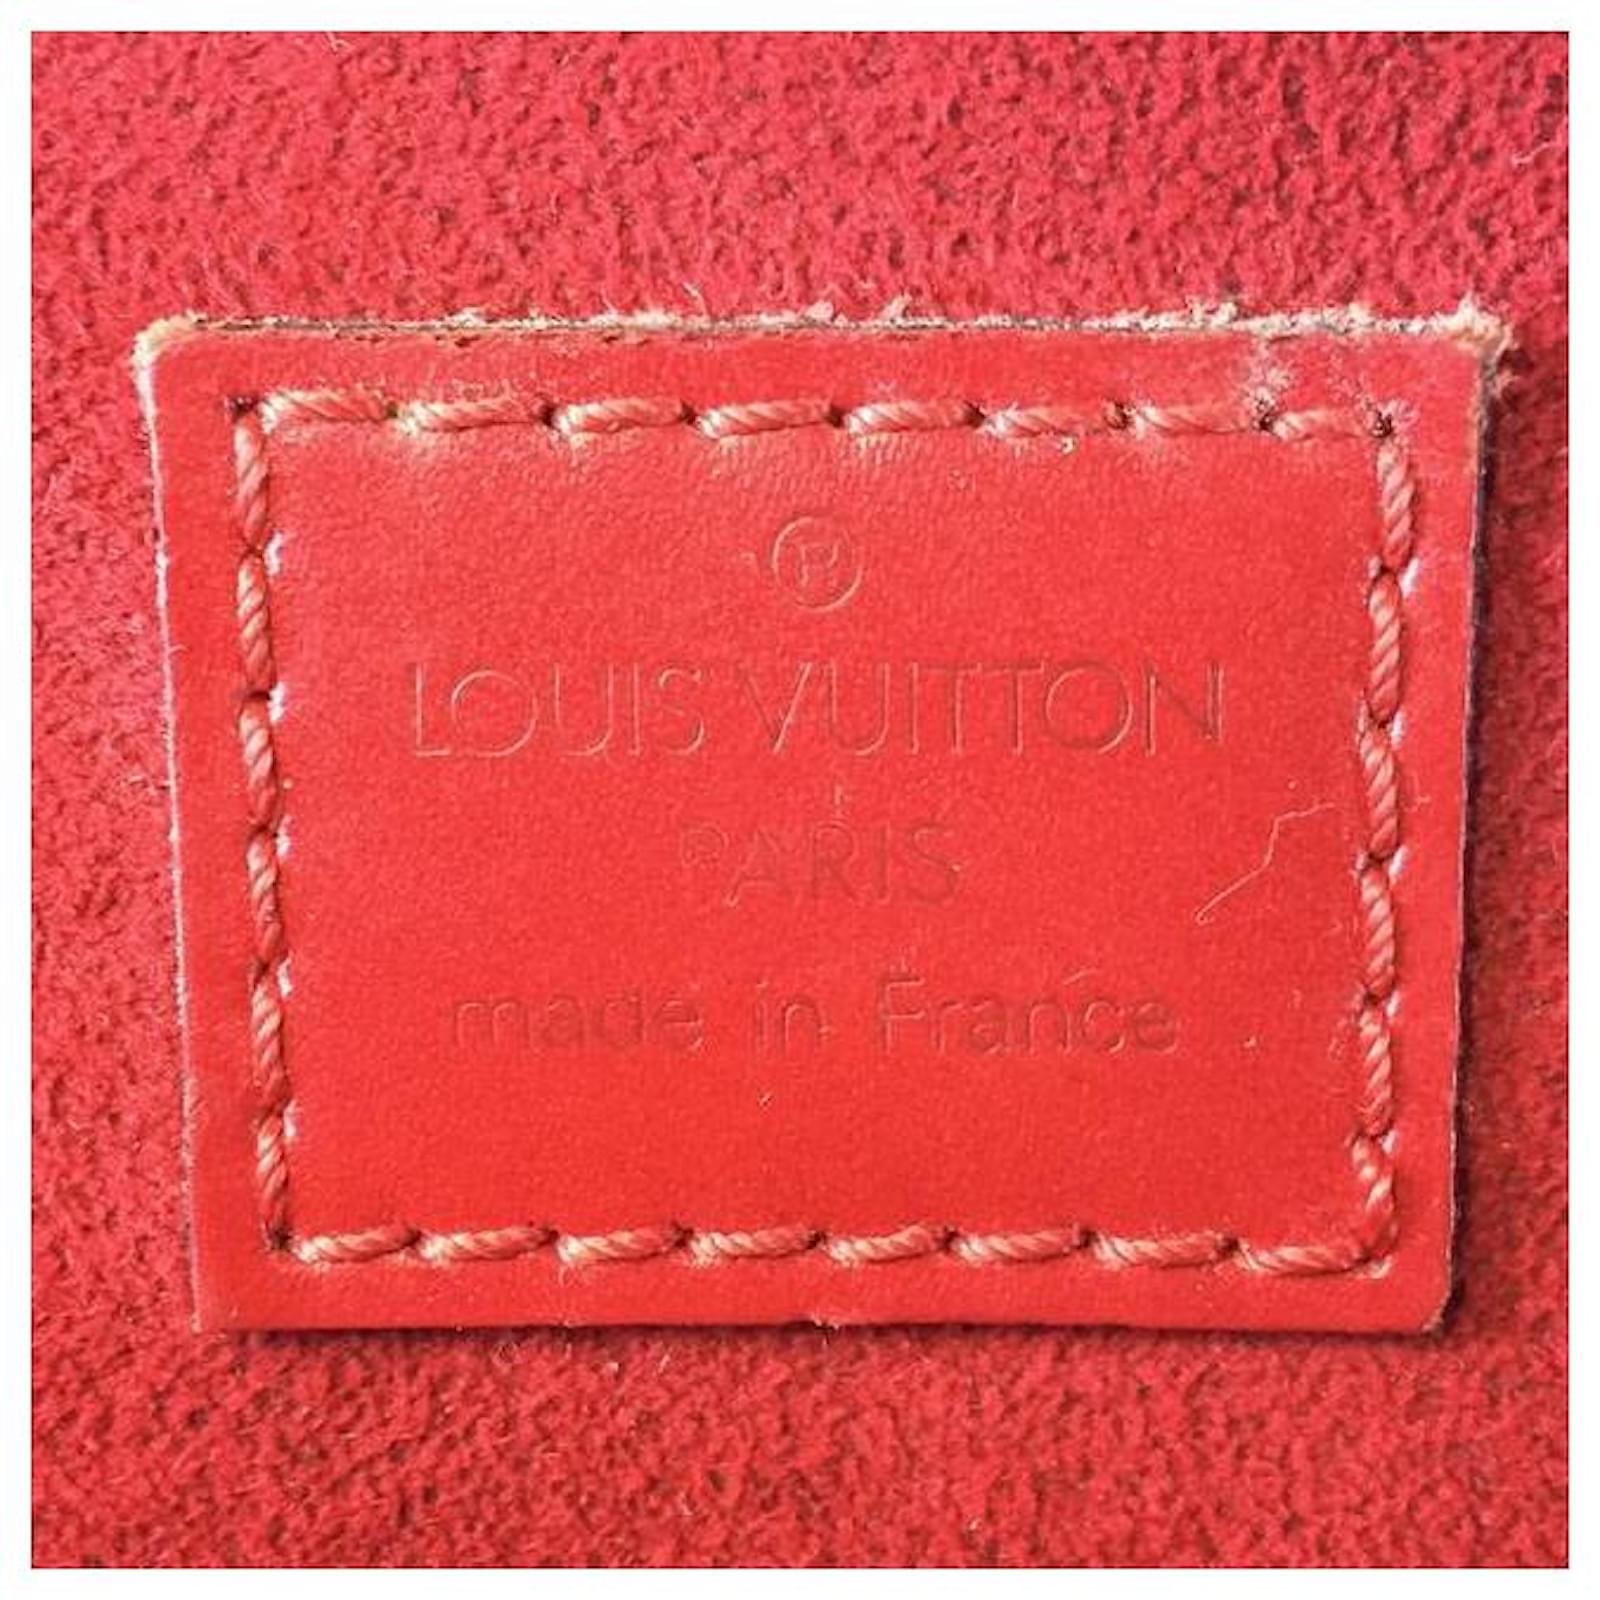 Louis Vuitton Speedy Handbag 395708